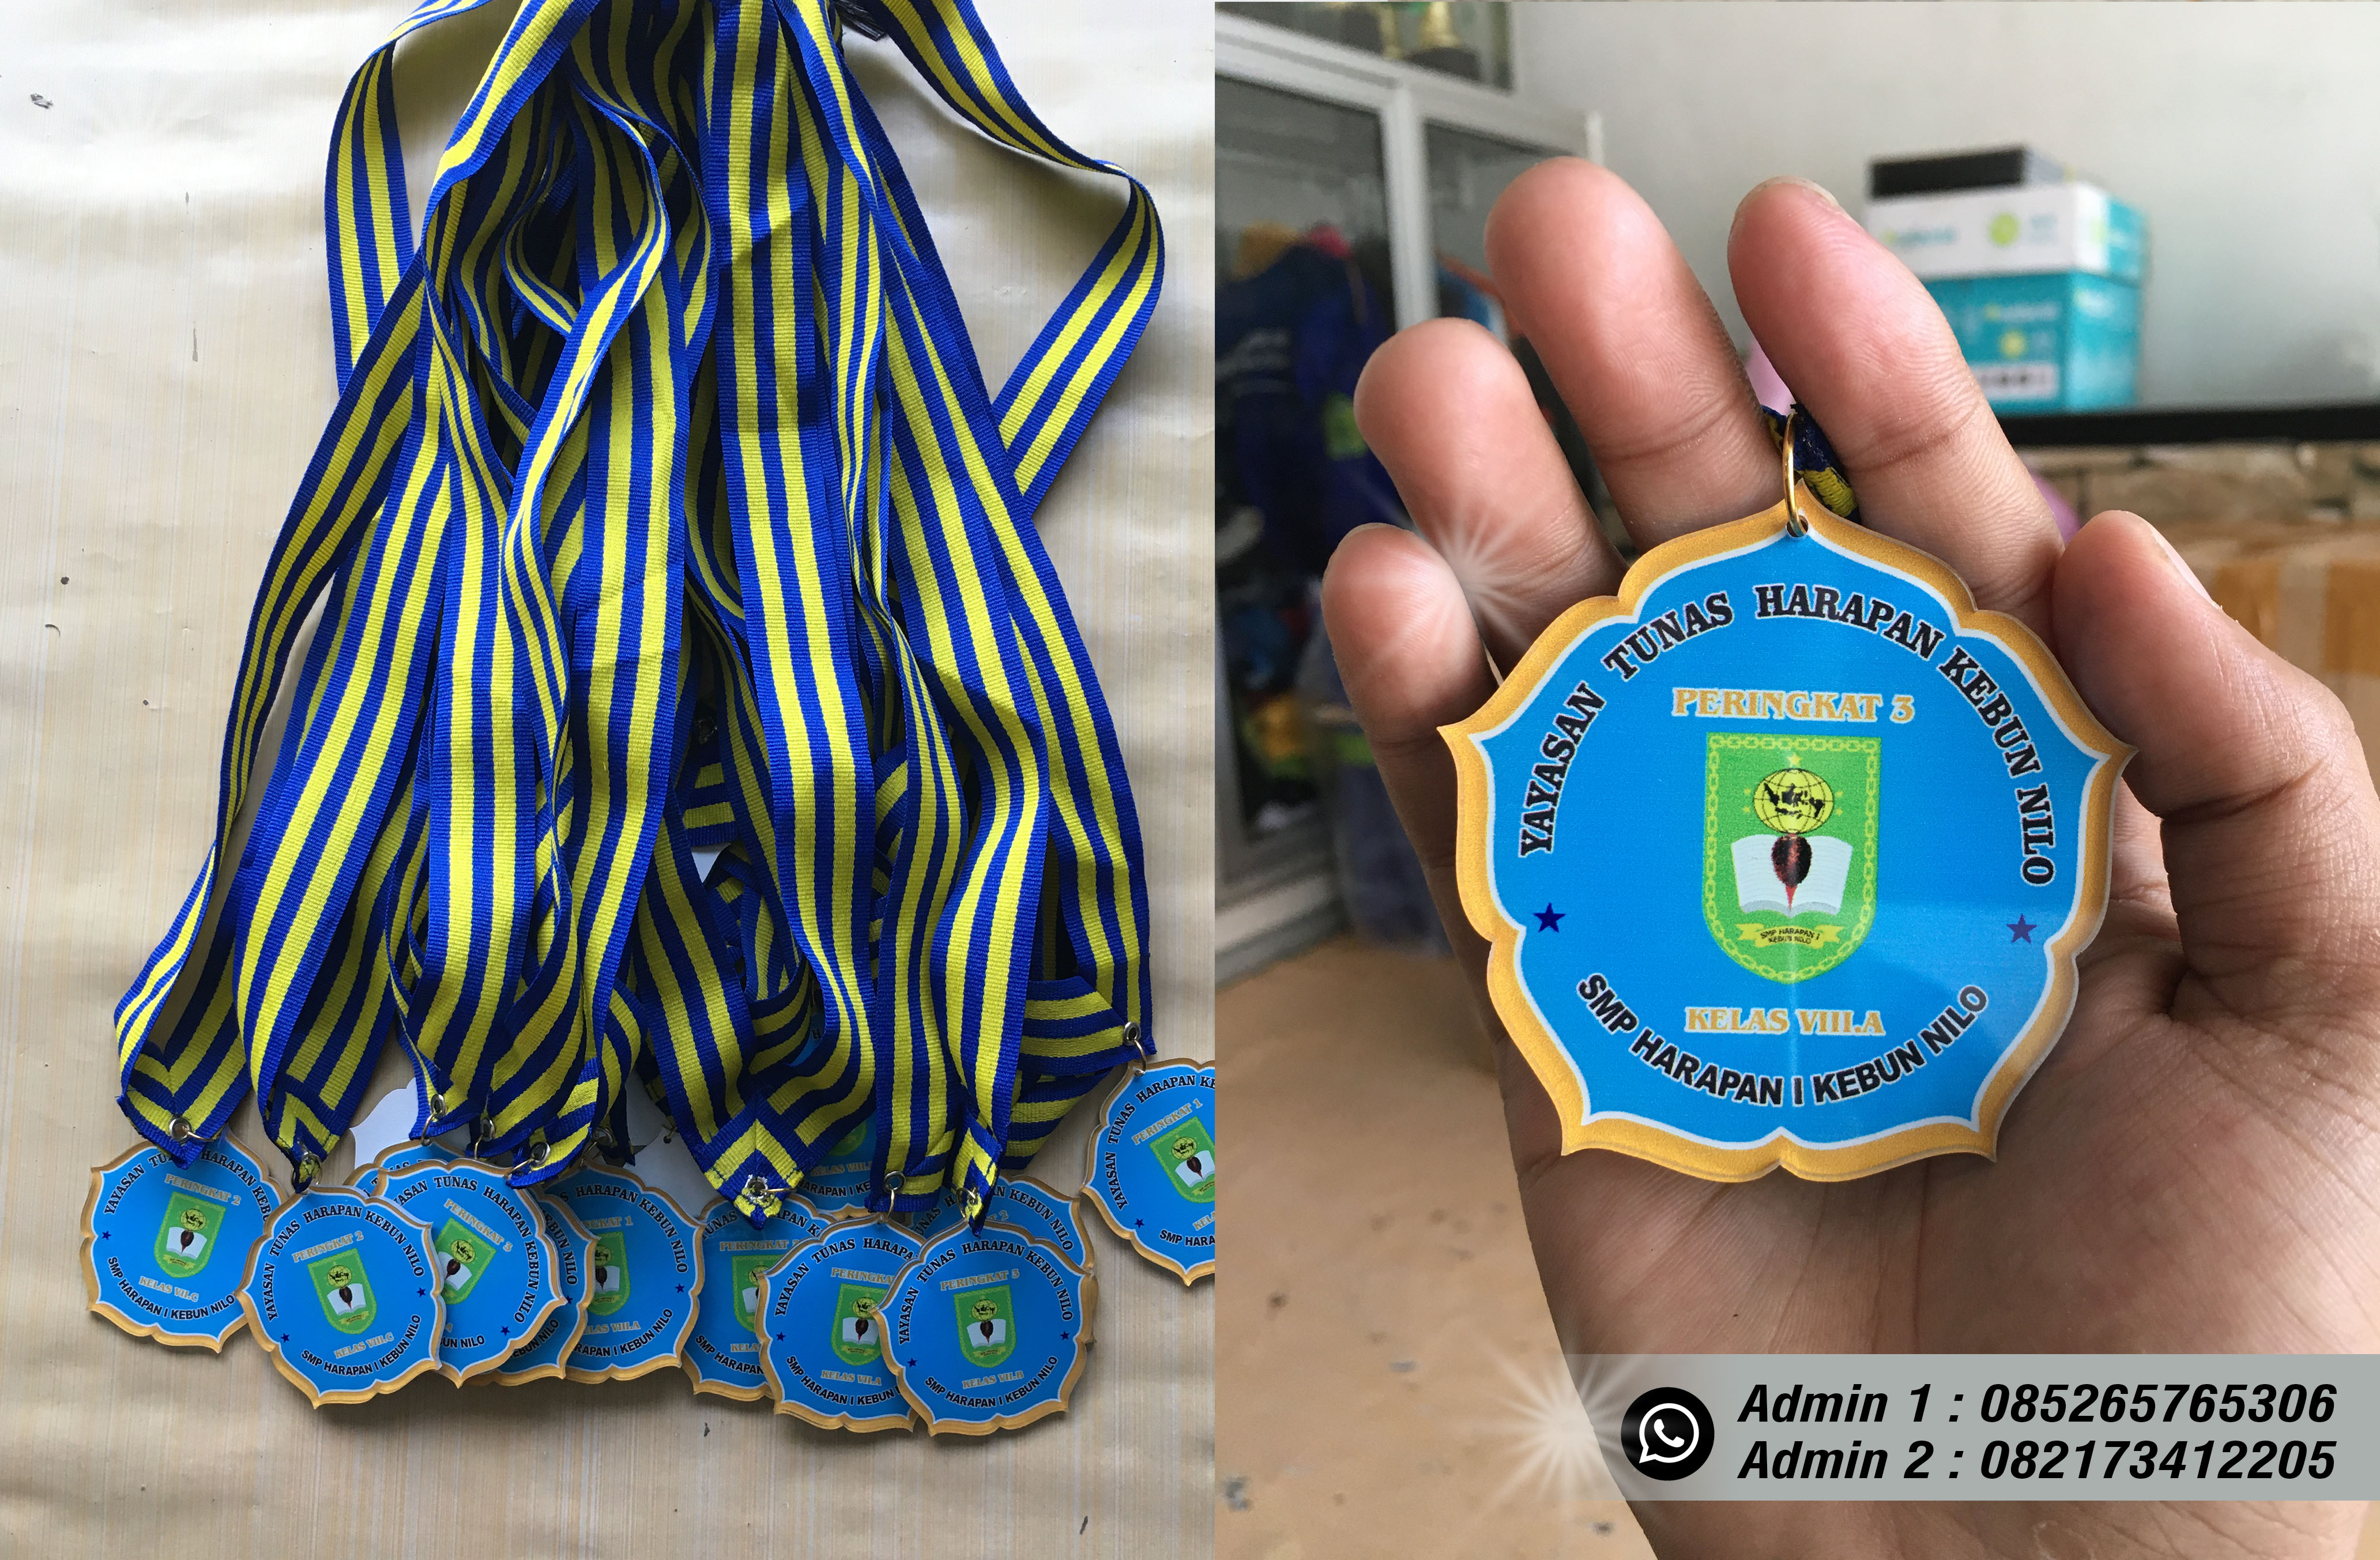 medali pekanbaru